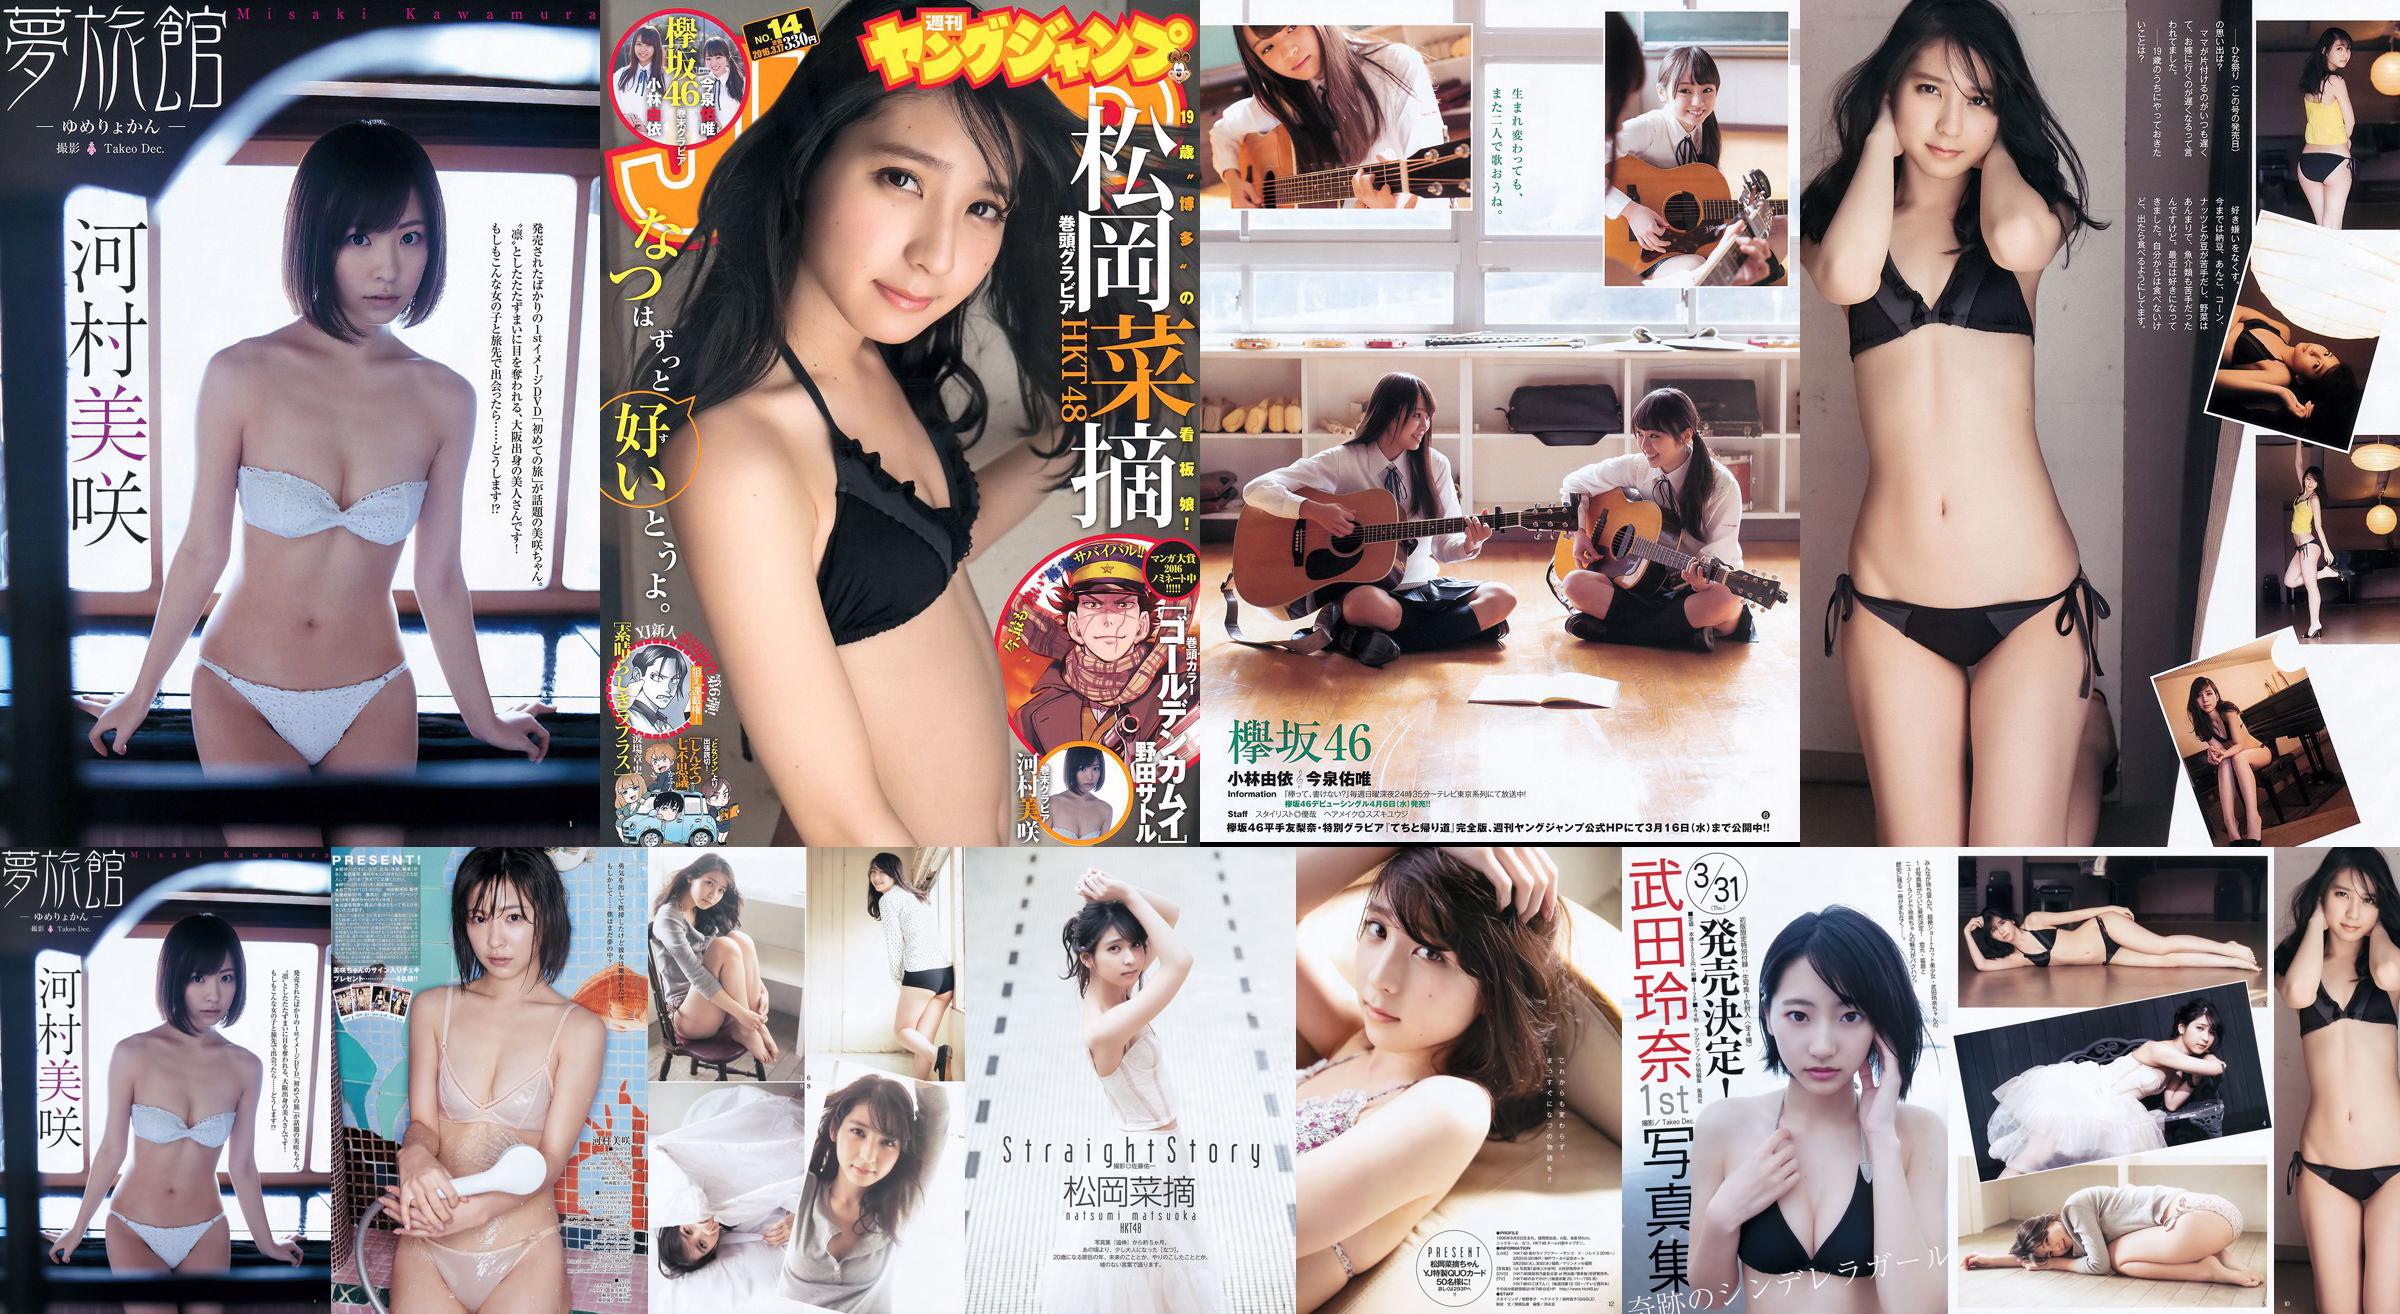 Choix de légumes Muraoka Yui Kobayashi Yui Imaizumi Misaki Kawamura [Weekly Young Jump] Magazine photo n ° 14 2016 No.ef20ad Page 9